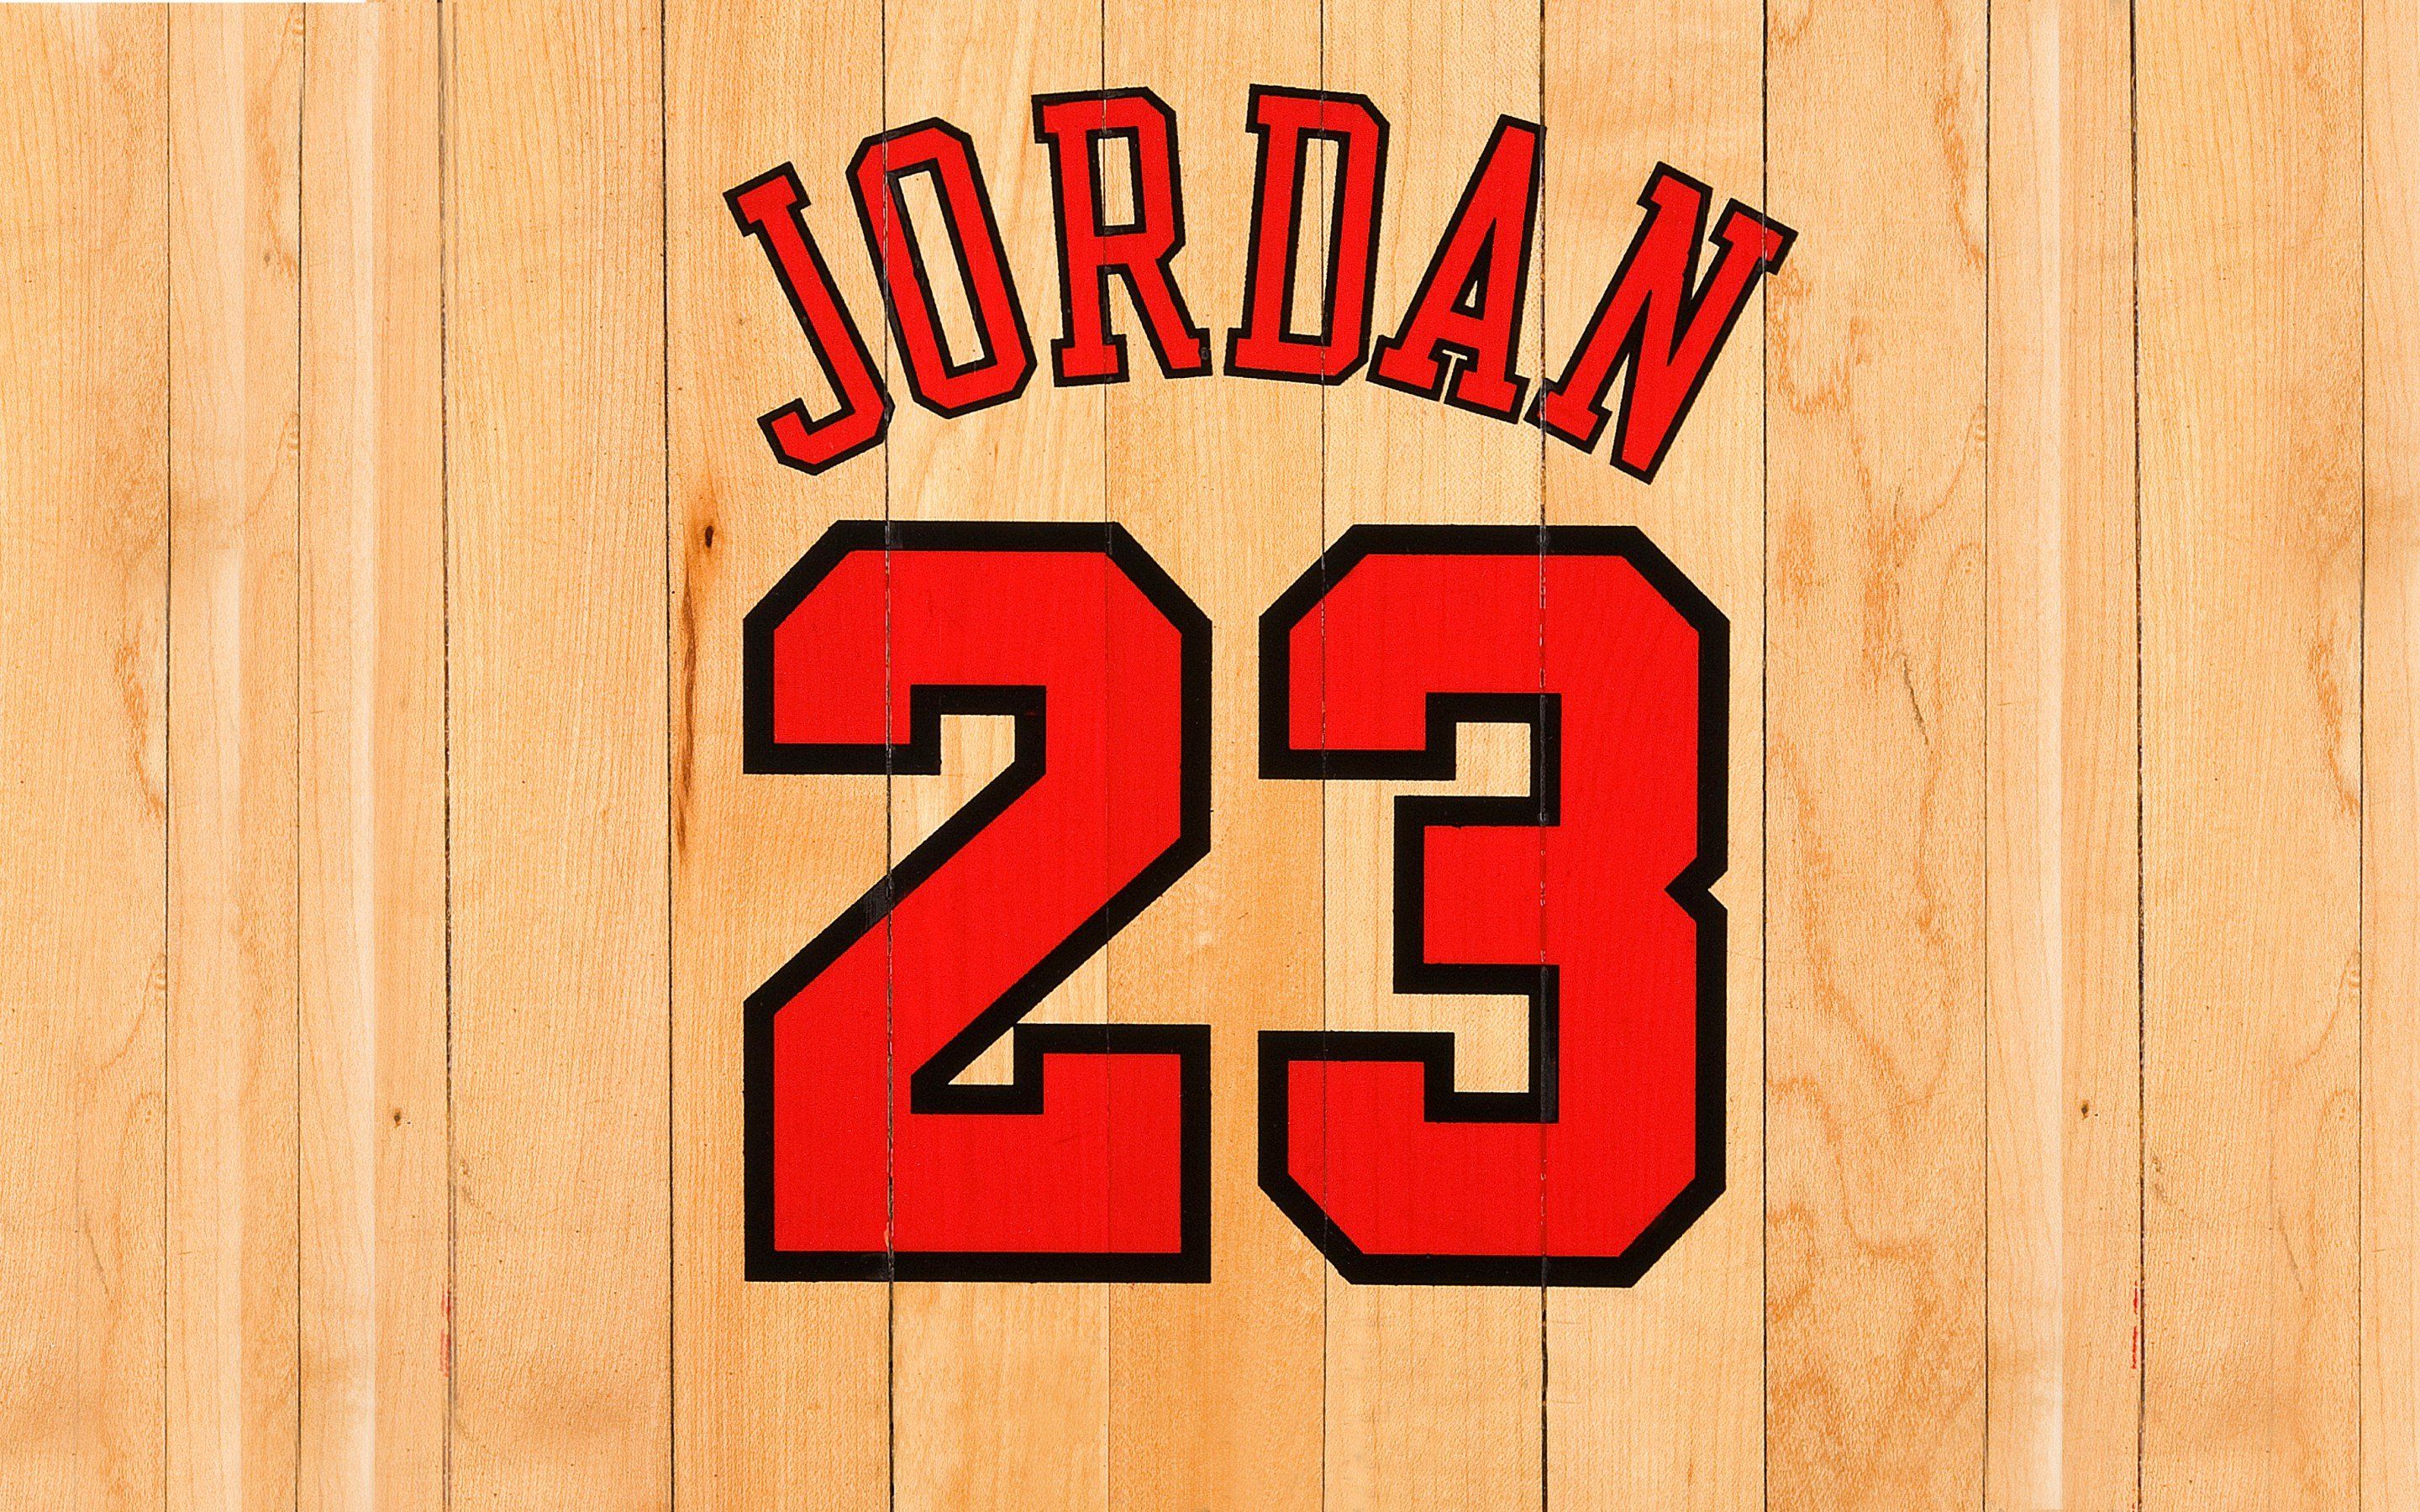 Michael Jordan jersey Stock Photo by ©rudavin 38364935